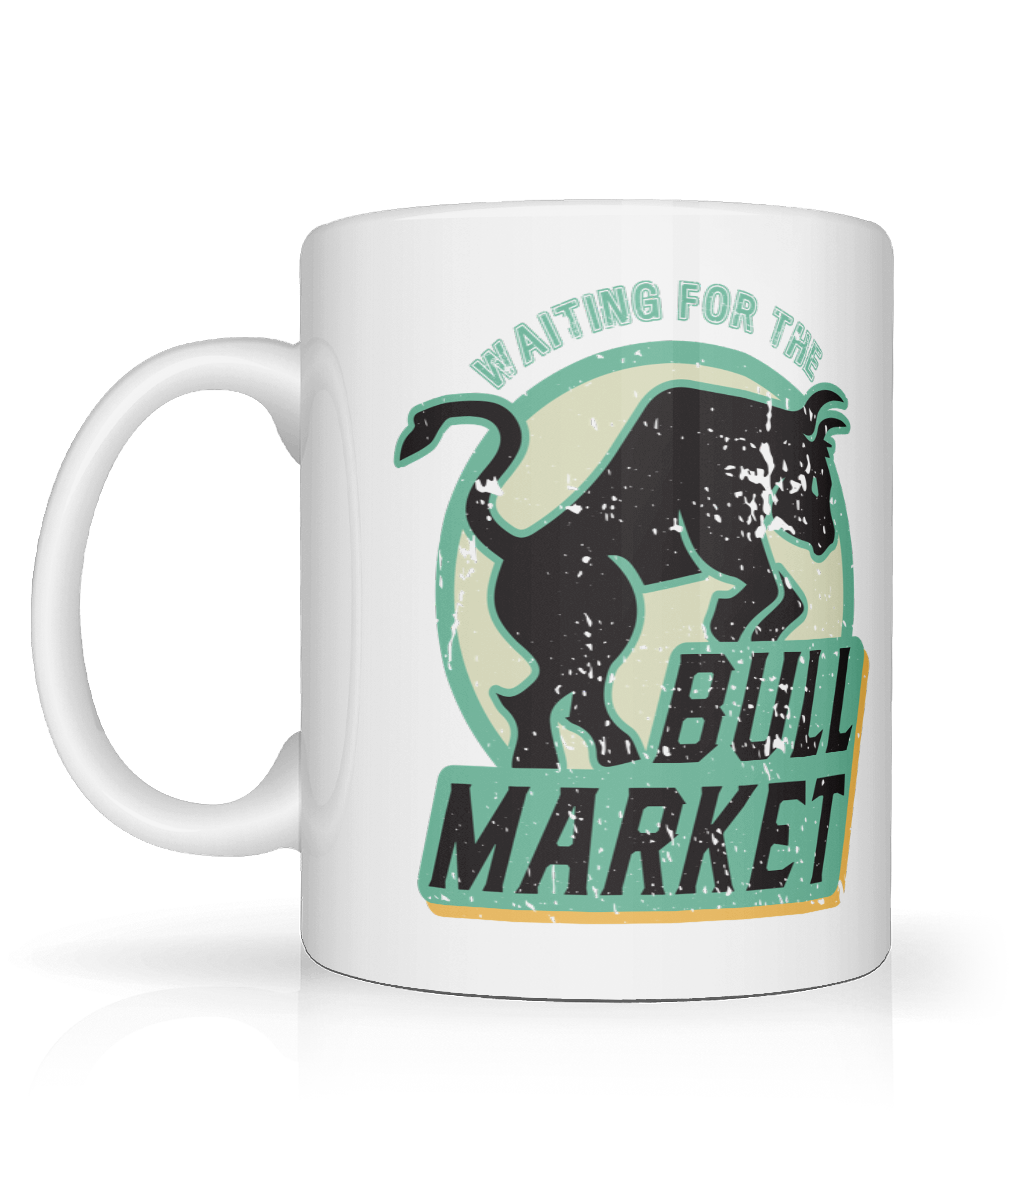 Crypto Mug, Waiting for the Bullmarket